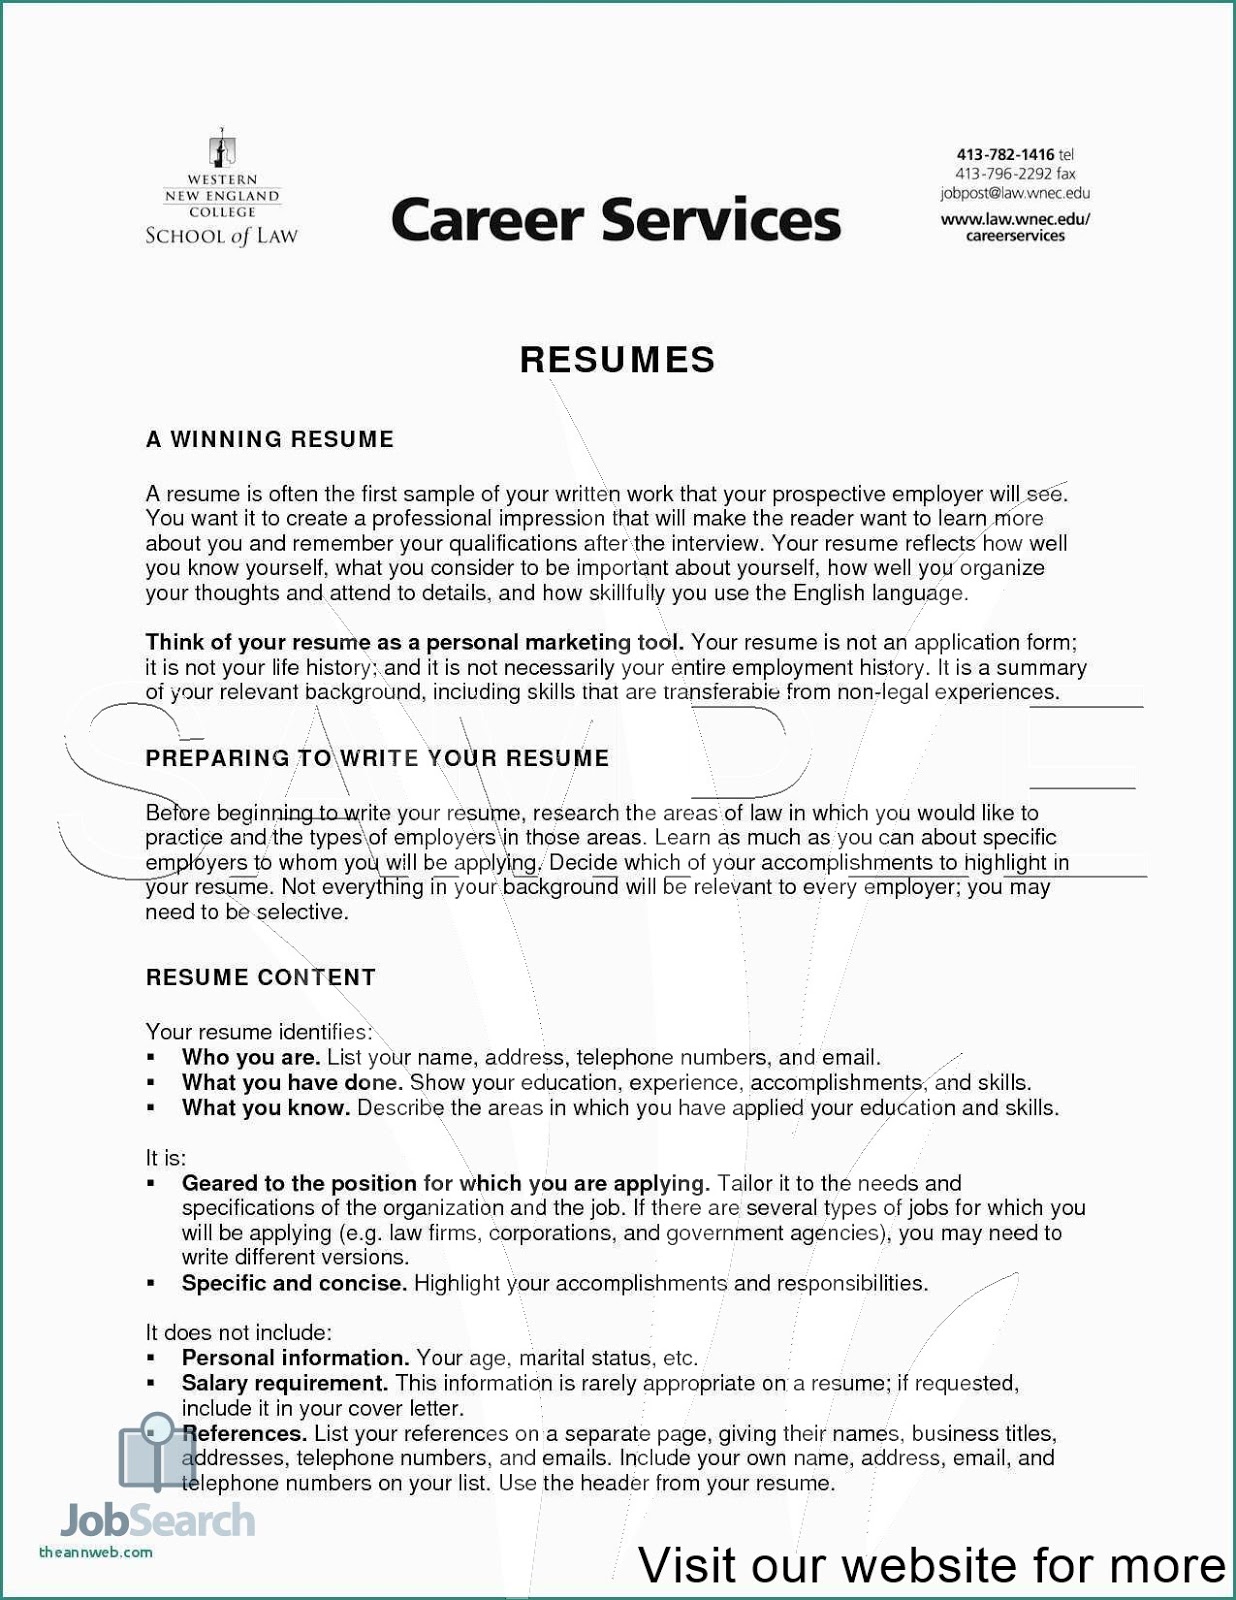 sales professional resume sample sales professional resume example sales professional summary